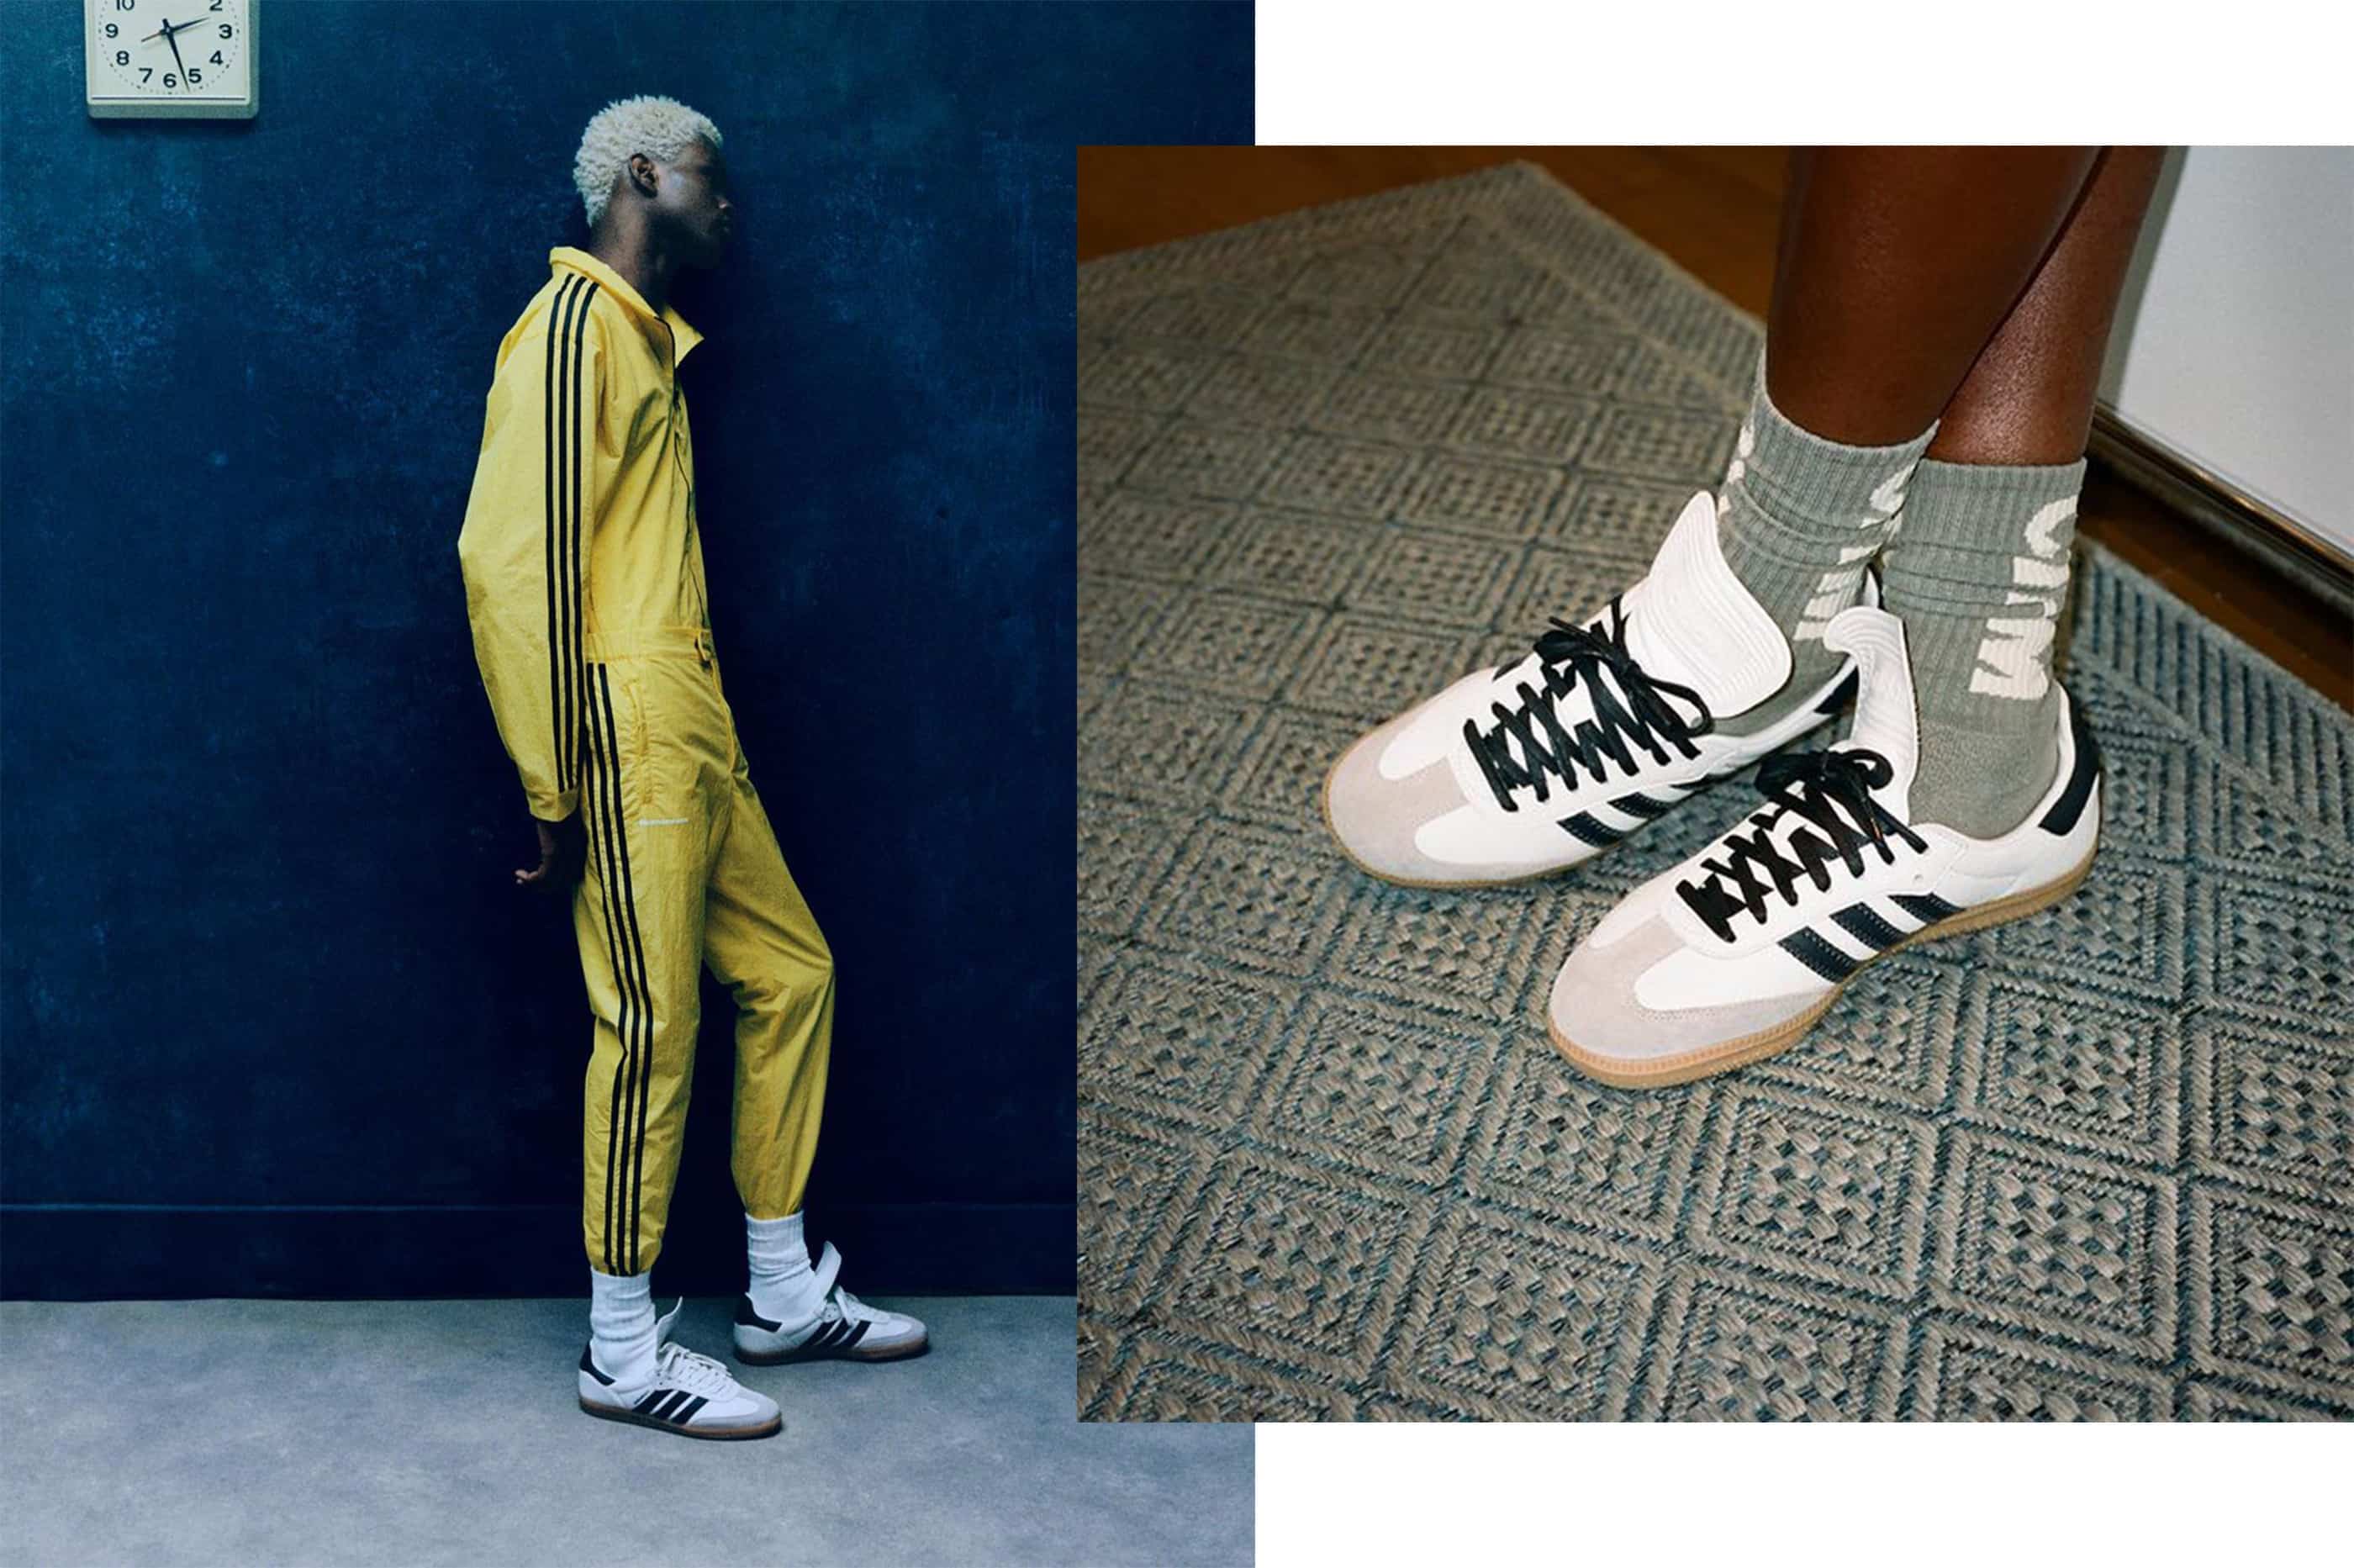 Adidas x Pharrell Williams Samba Sneakers